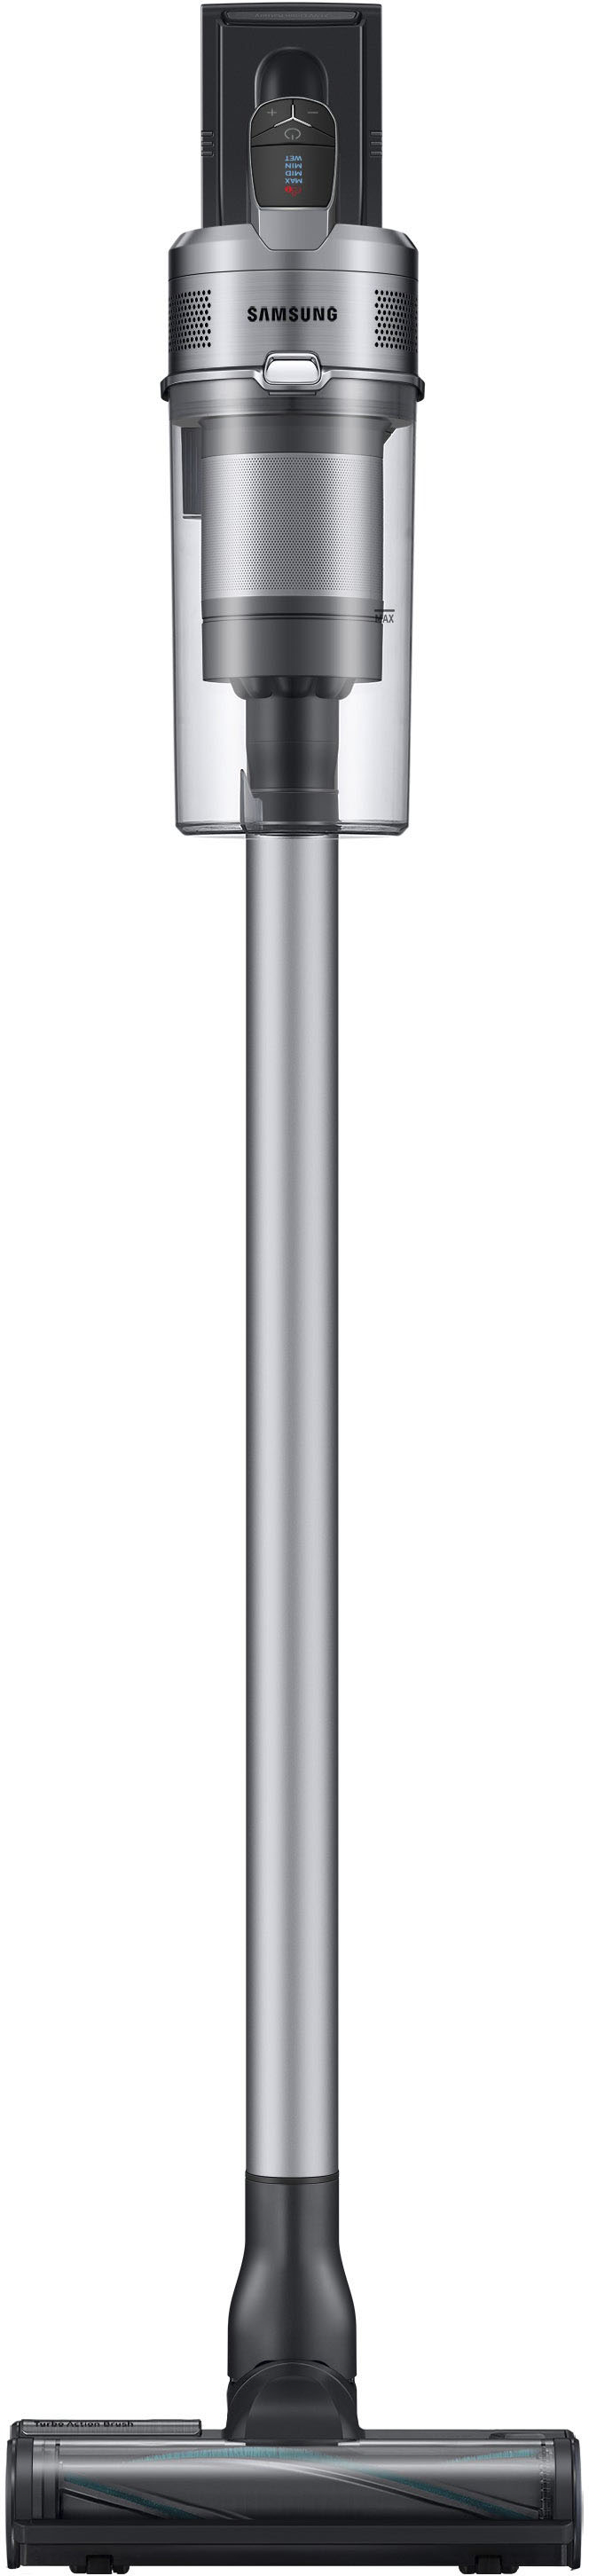 Samsung Stick 75 Cordless - Buy Vacuum ChroMetal Jet Titan Best VS20T7511T5/AA